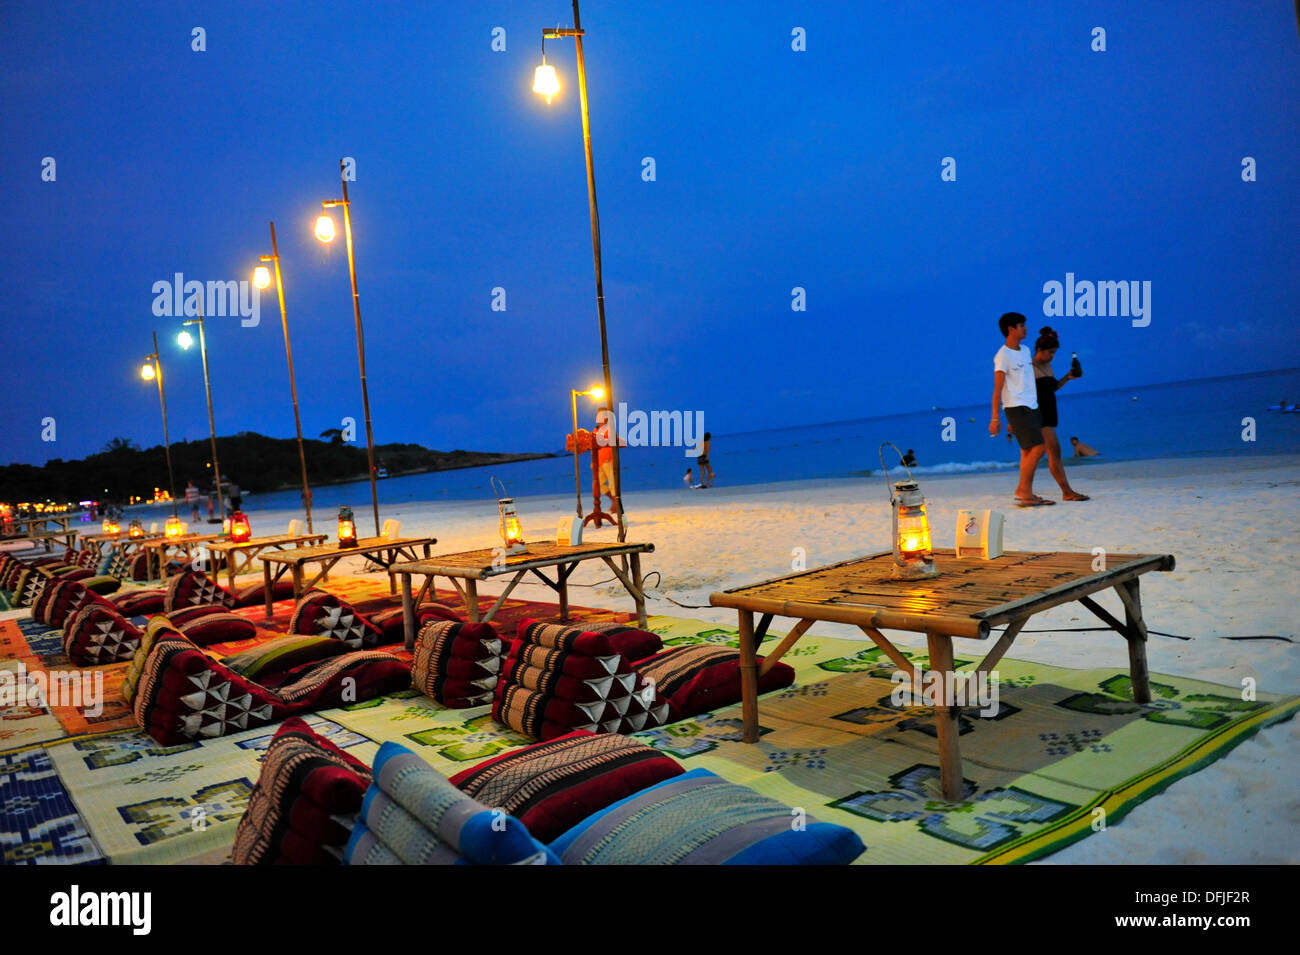 Thailand's islands & beaches - Dining on Thai triangle cushions in the sand at Sai Kaew Beach, Koh Samet island, Thailand Stock Photo